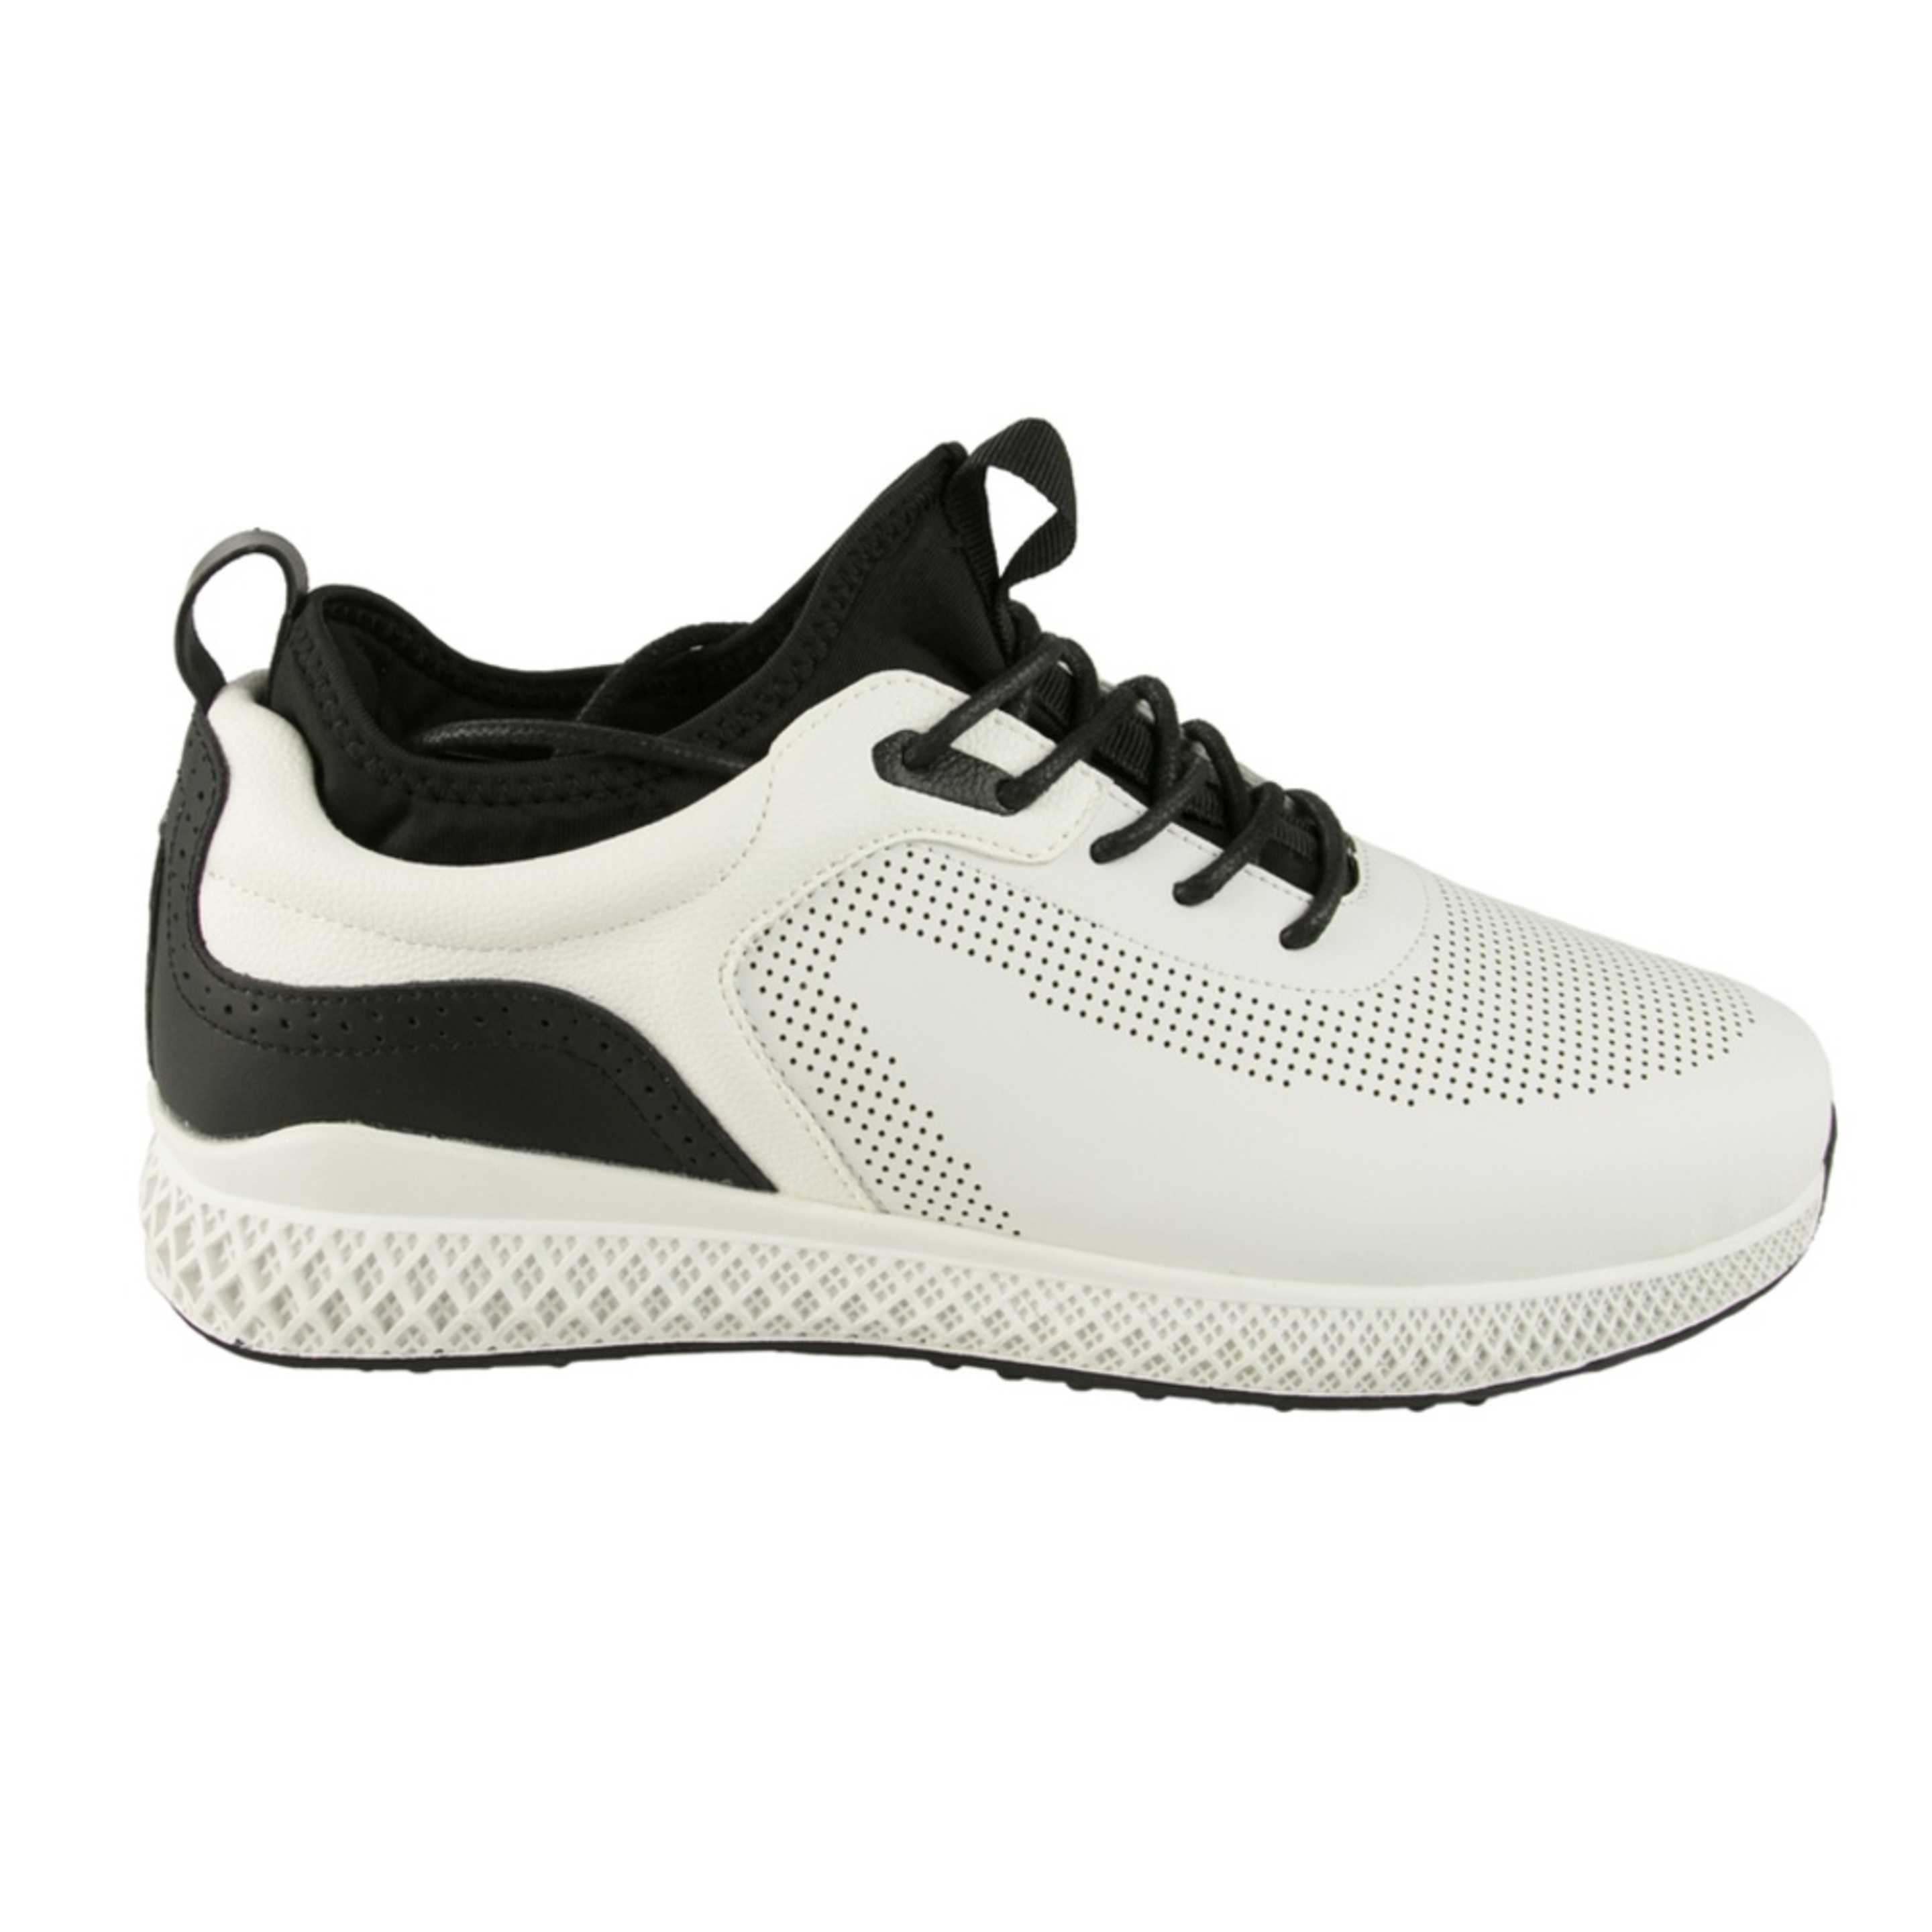 Sapatos De Golfe Masculino Sapatos Desportivos Sapatos De Couro - Preto/Branco - Sapatos de golfe para homens sapatos de couro | Sport Zone MKP